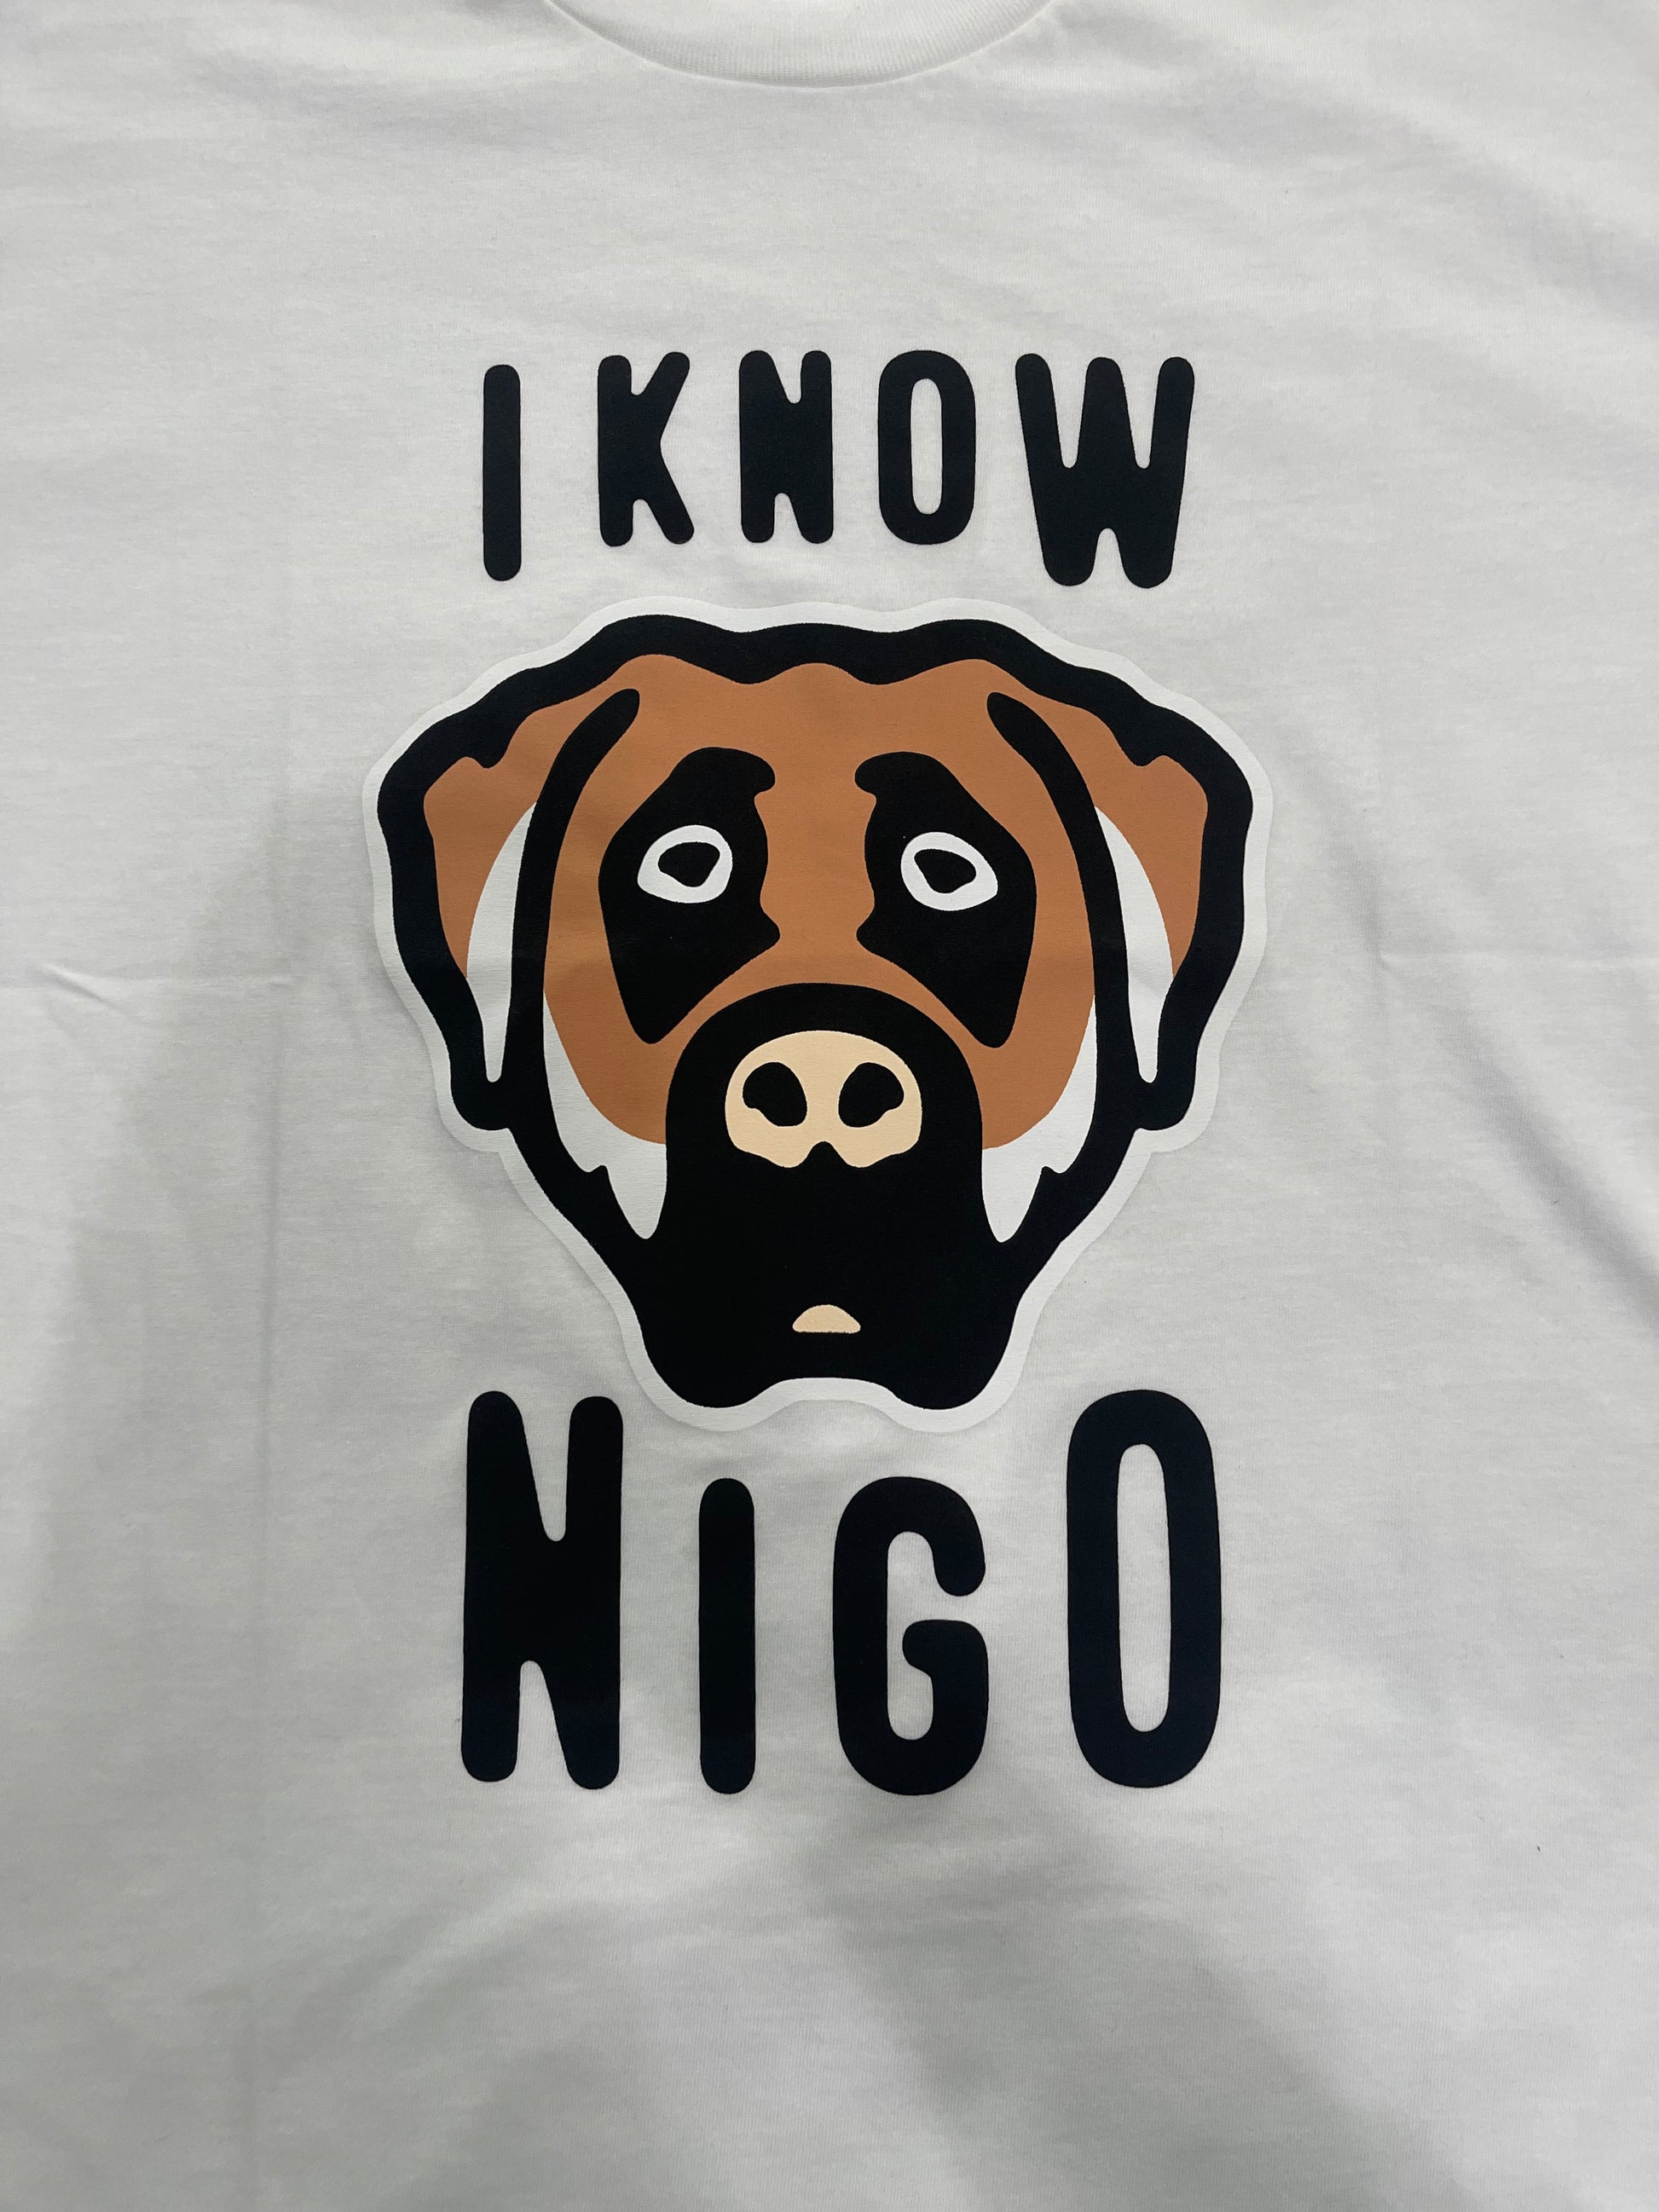 Human Made, Shirts, Kaws X Human Made Tshirt 3 Large Nigo